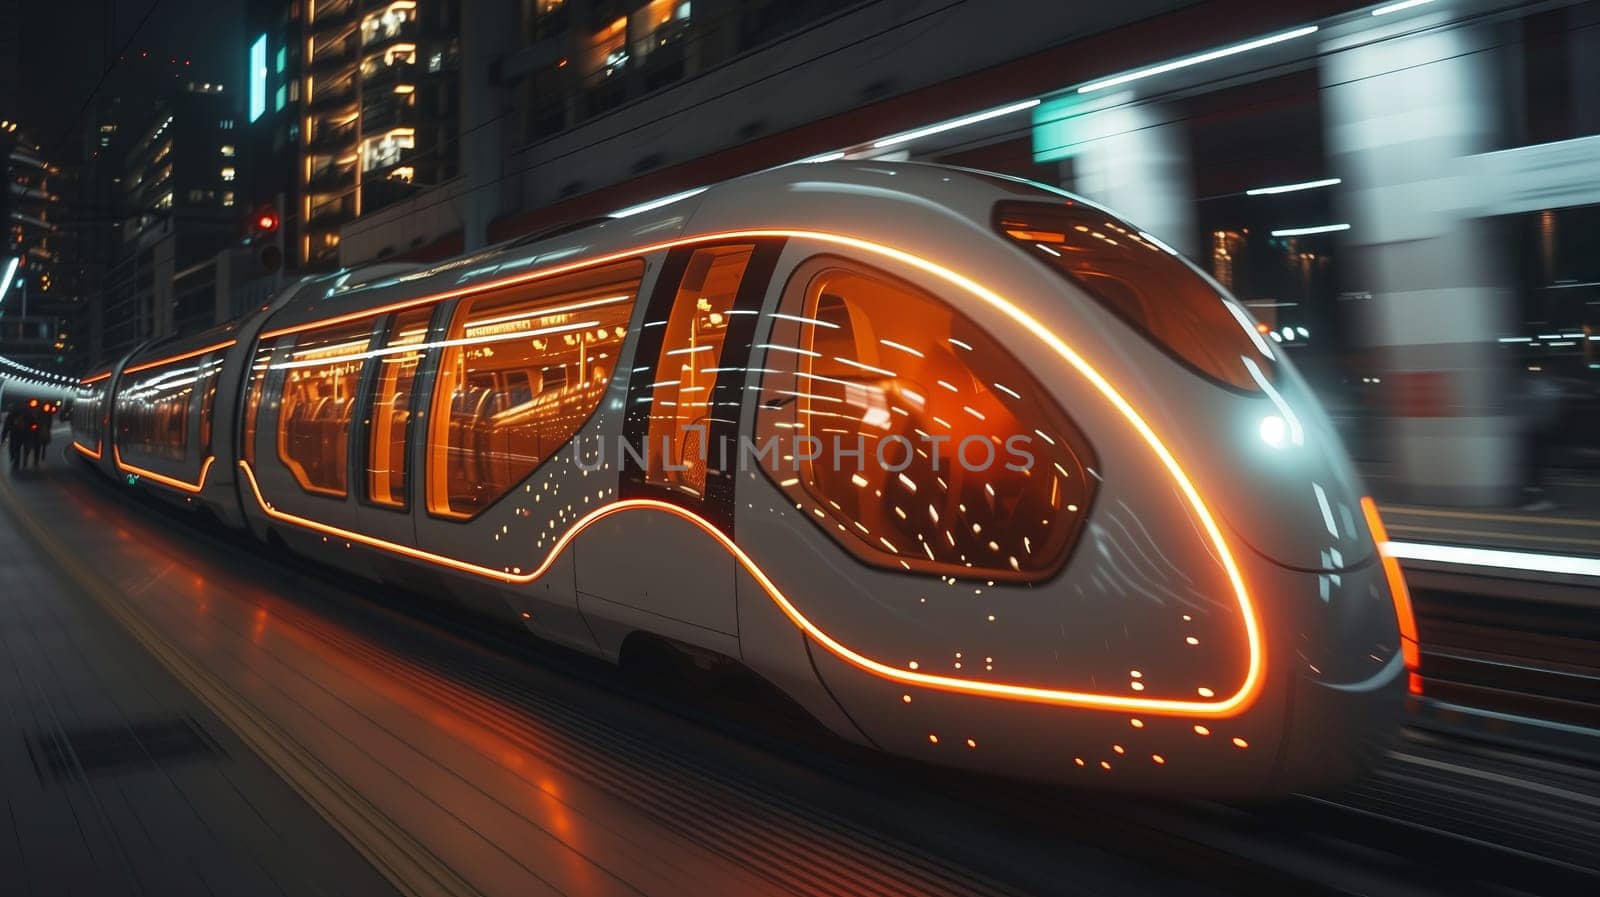 Futuristic train with automotive lighting speeding down tracks at night by richwolf